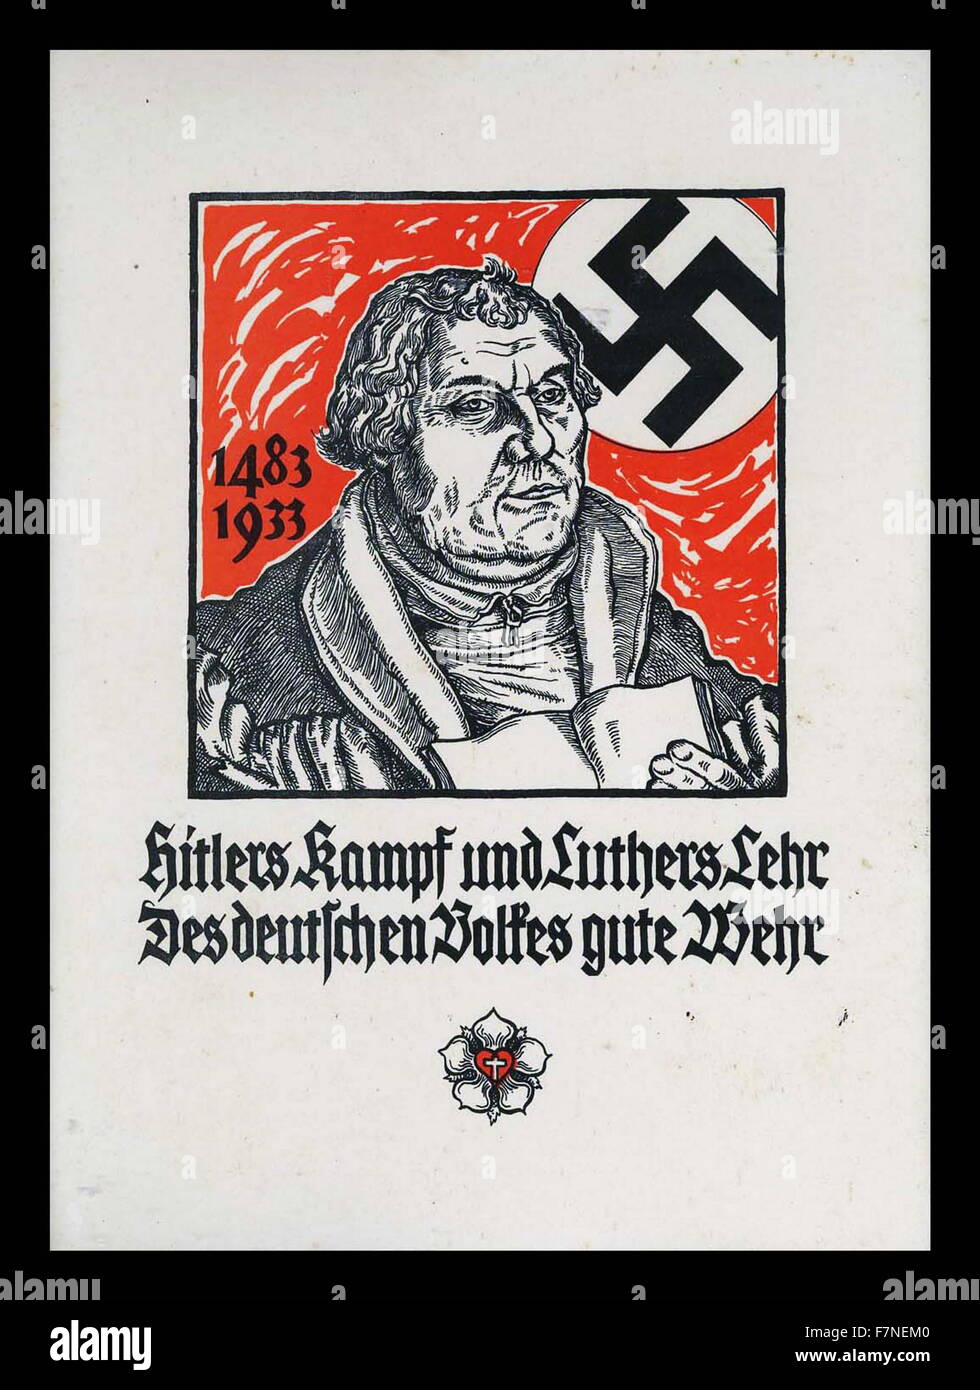 Cartel De Propaganda Nazi Fotos e Imágenes de stock - Alamy